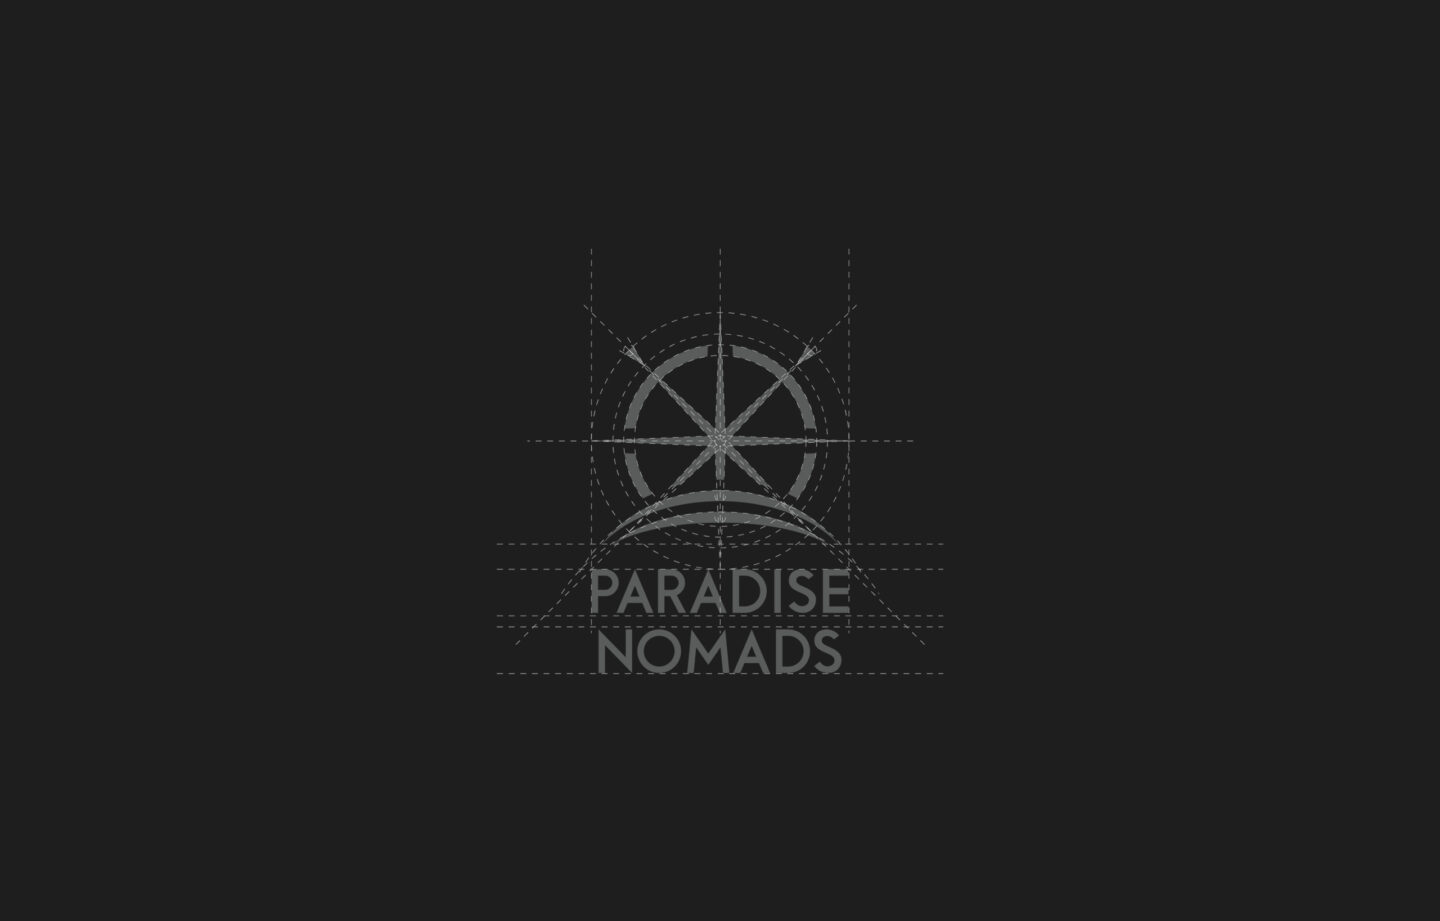 Paradise Nomads - Σχεδιασμός και Ανάπτυξη Λογοτύπου από Greatives Web